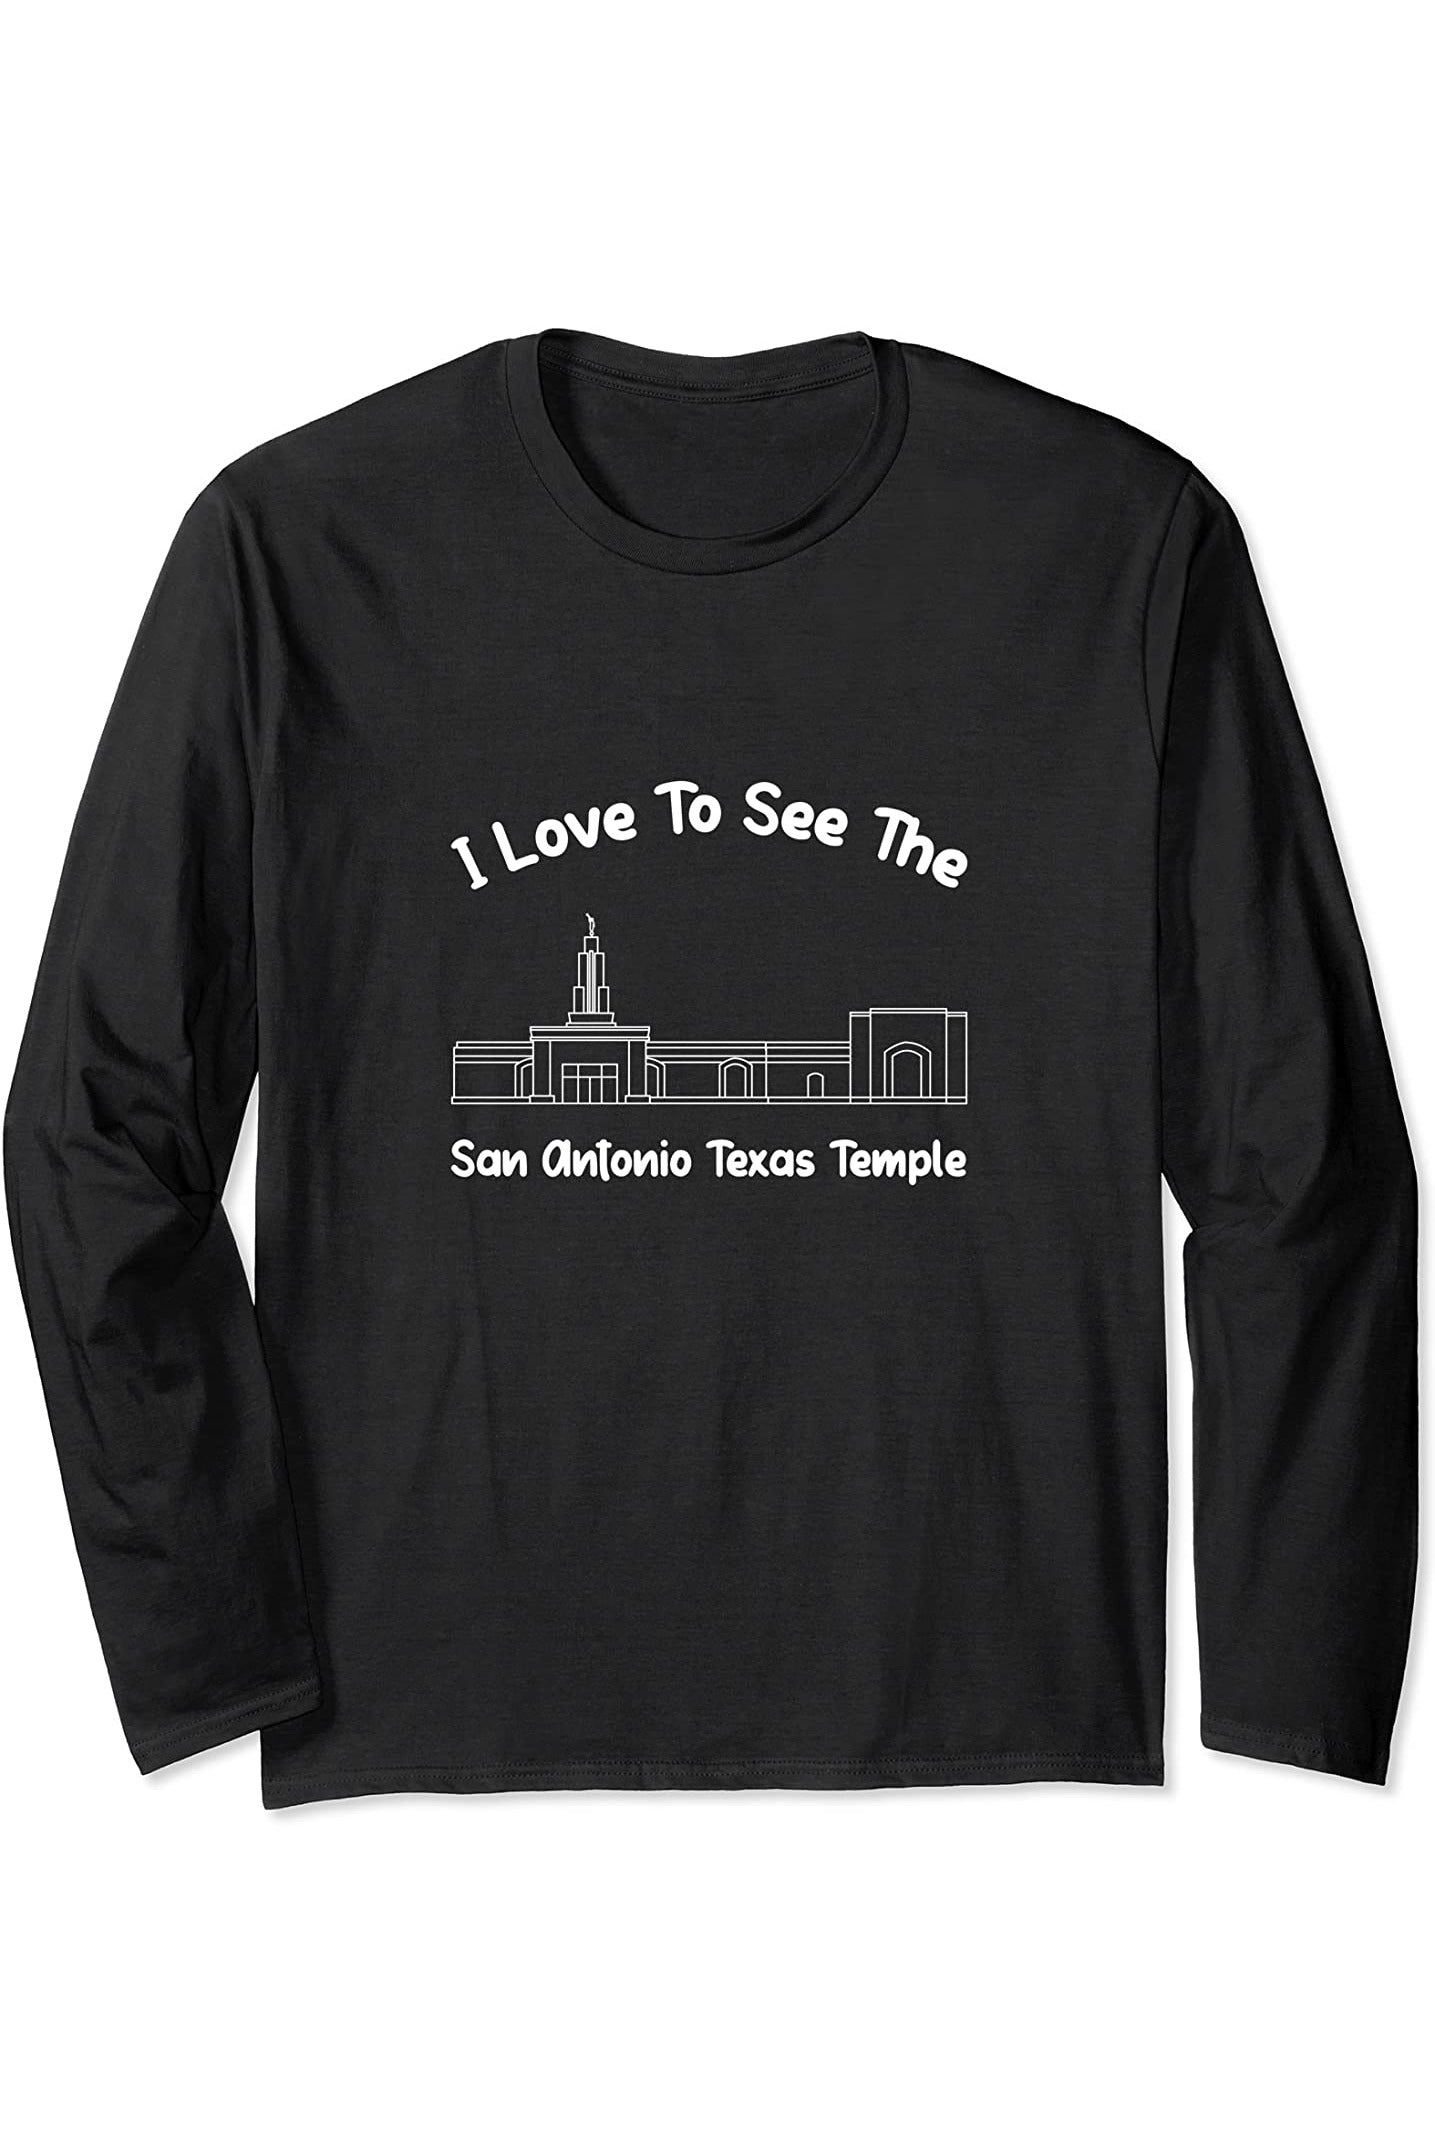 San Antonio Texas Temple Long Sleeve T-Shirt - Primary Style (English) US